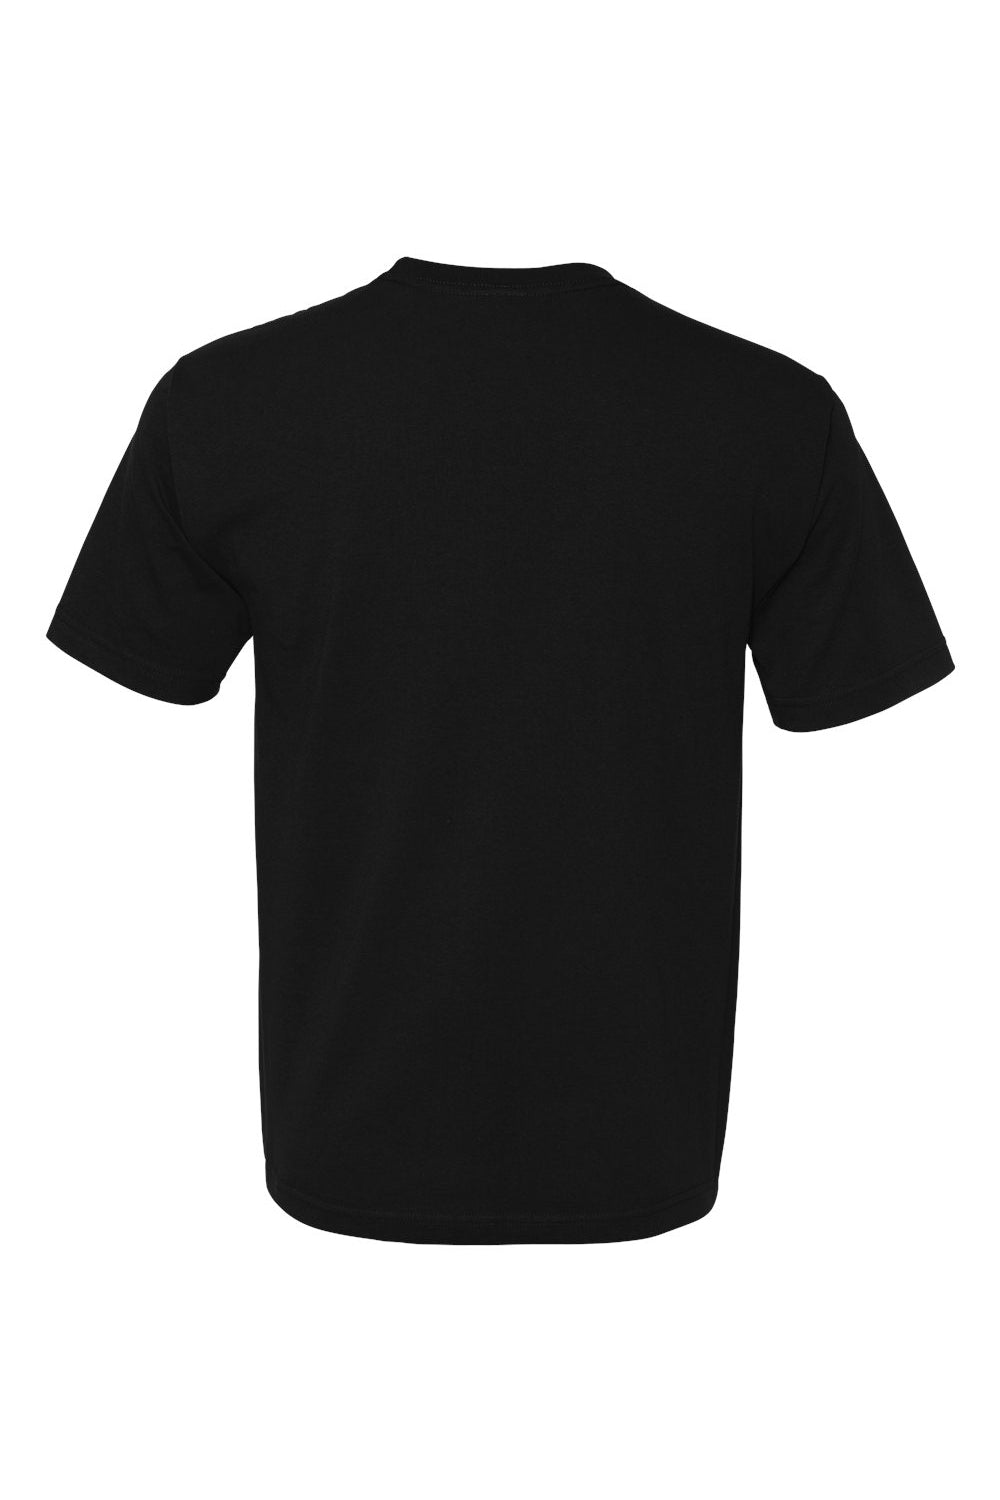 Bayside BA5040 Mens USA Made Short Sleeve Crewneck T-Shirt Black Flat Back